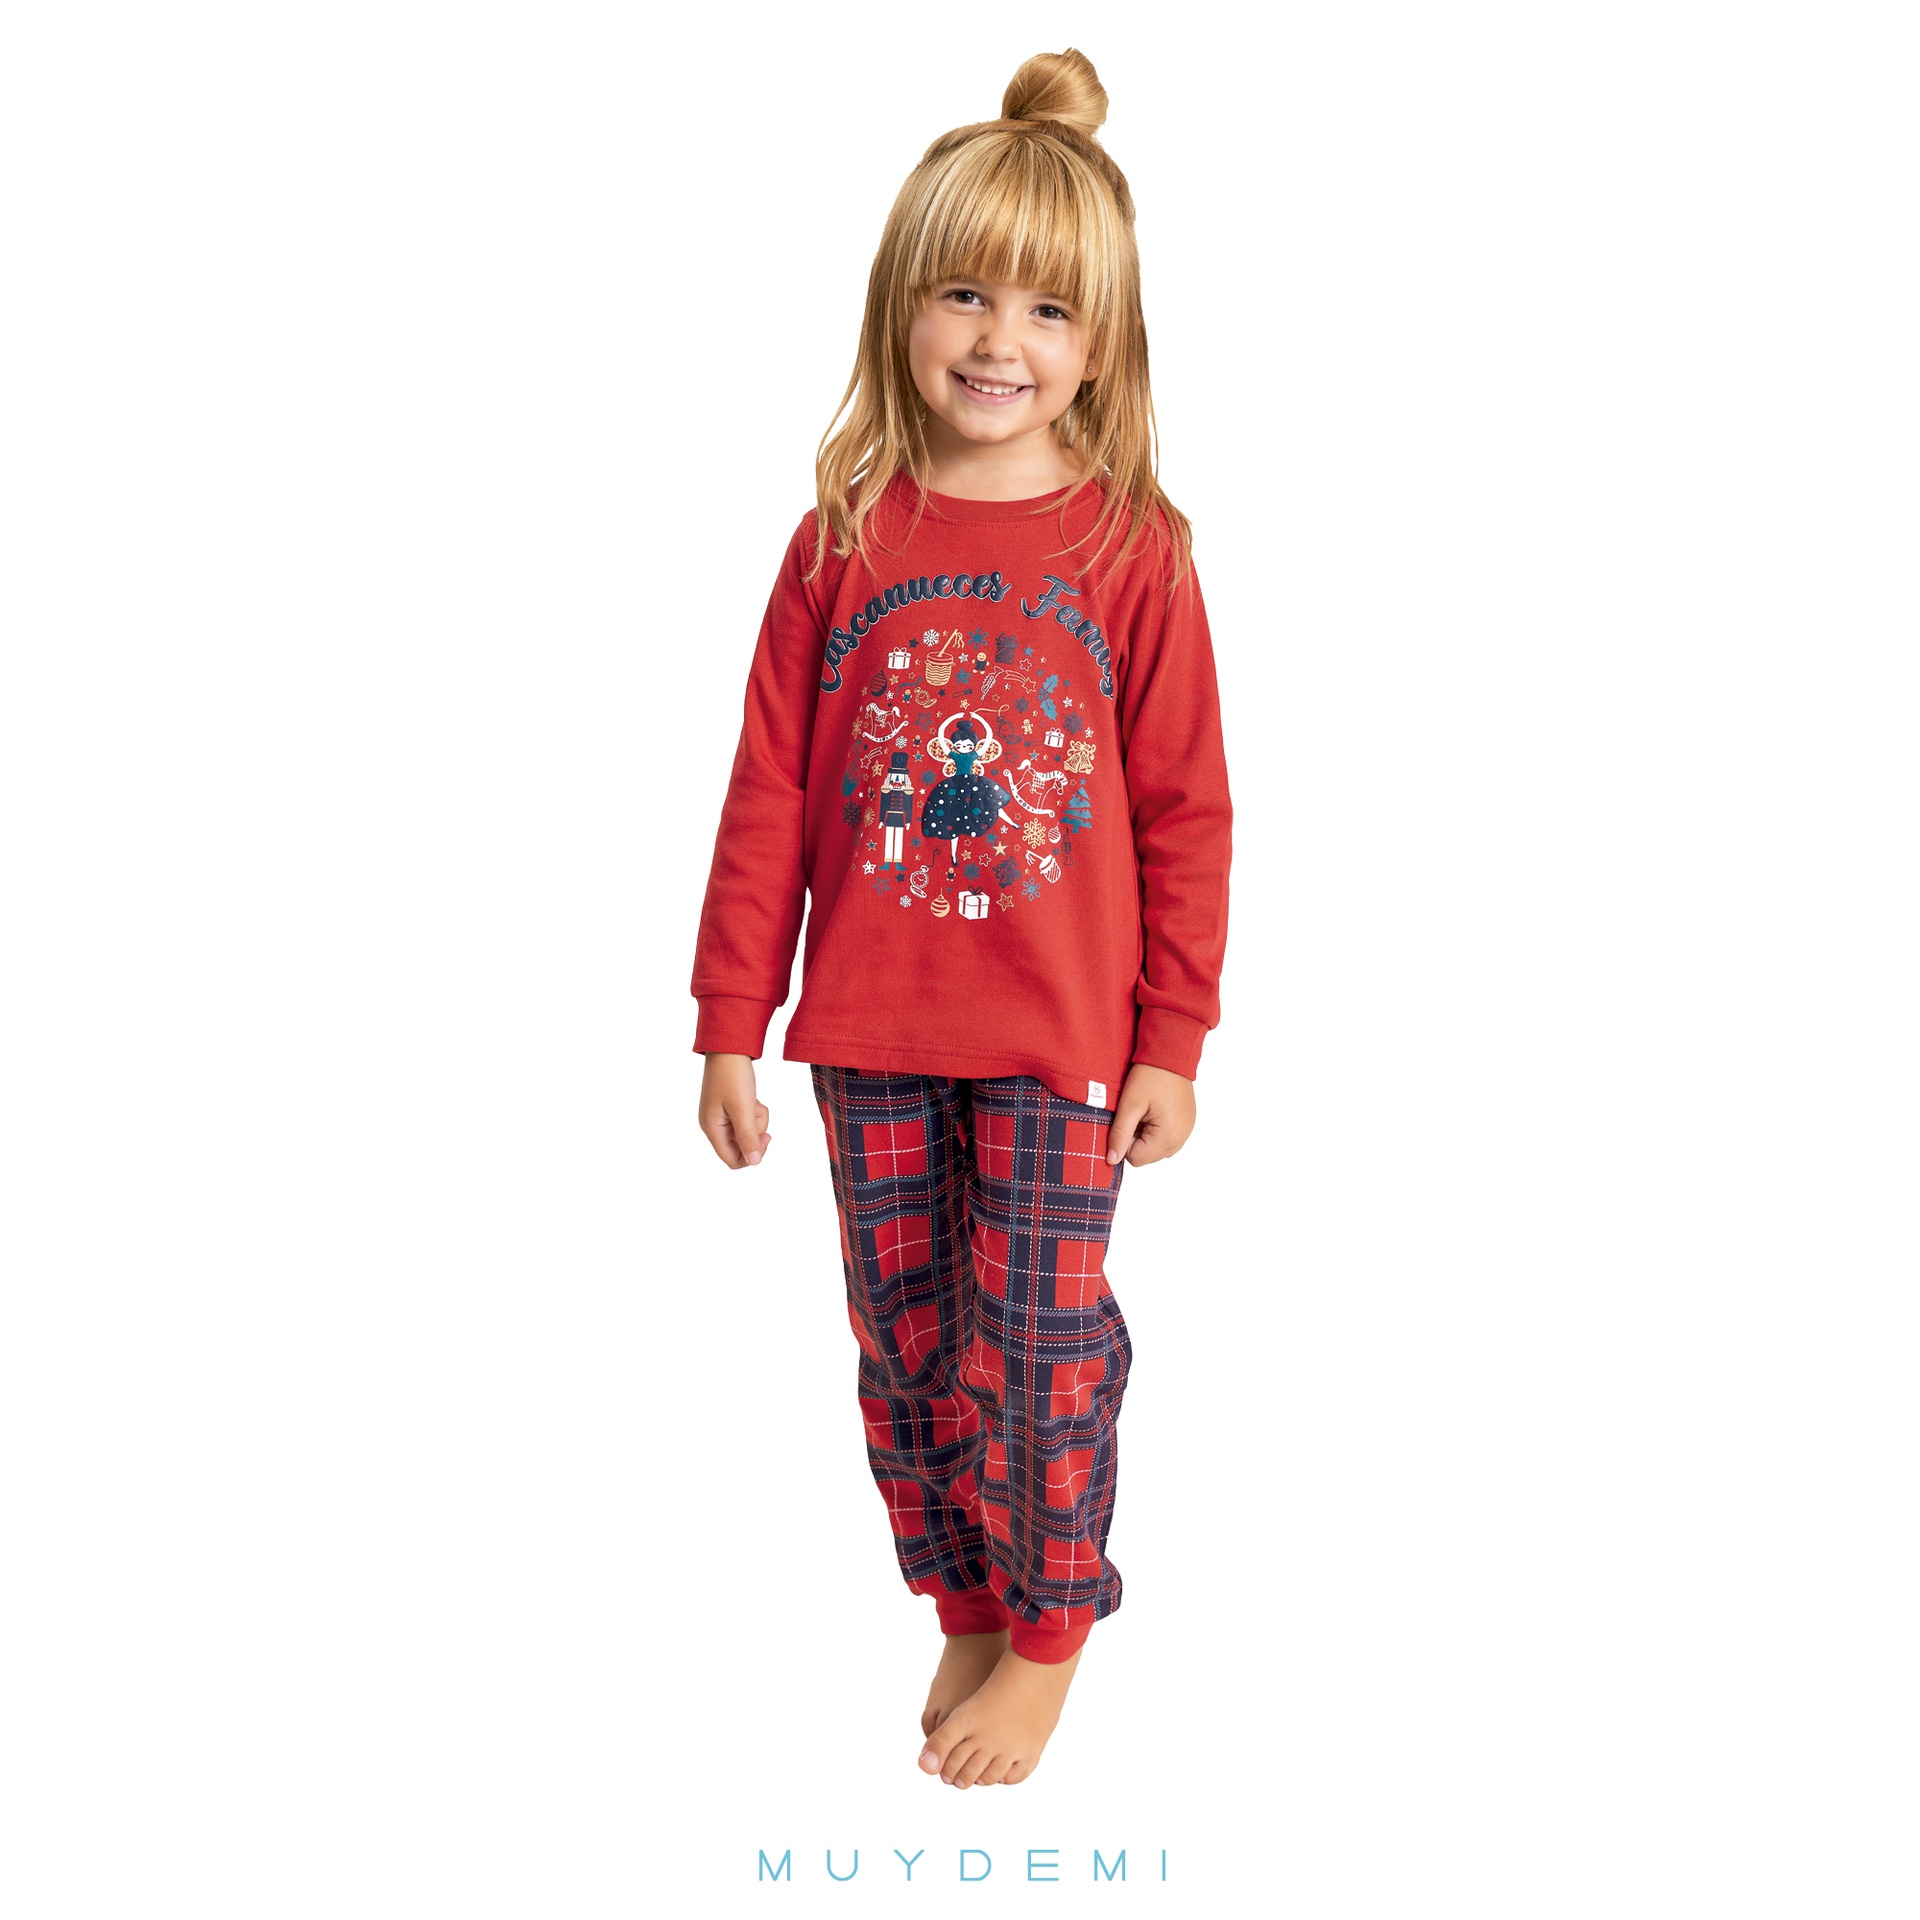 Pijama de invierno Bruja molona de niña. Muydemi